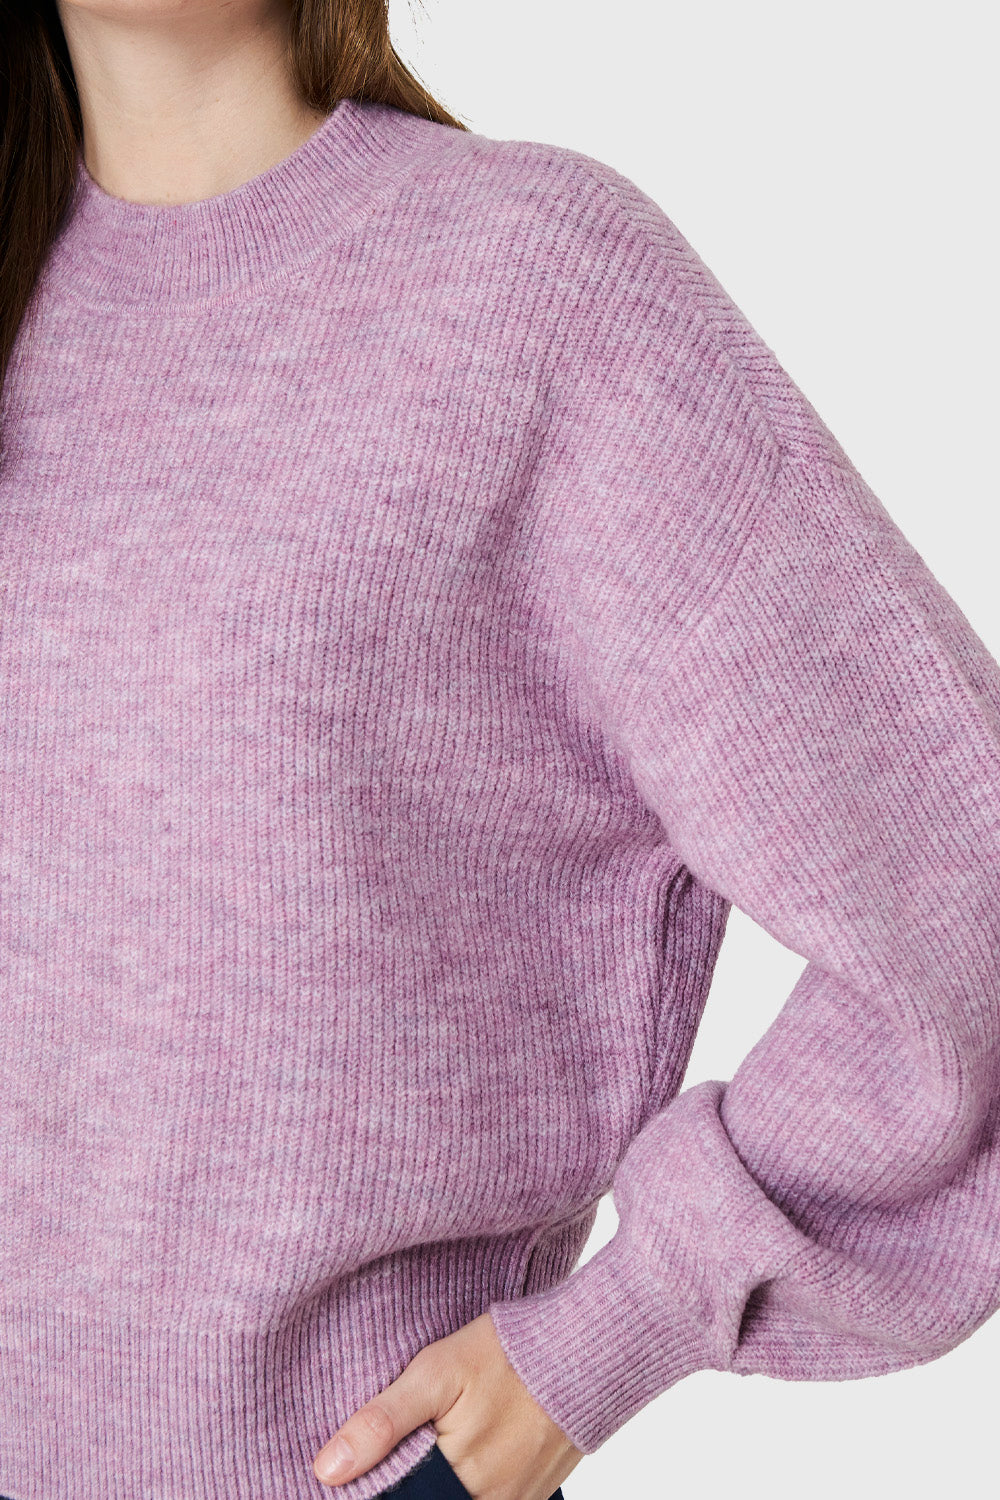 Sweater Básico Soft Lila